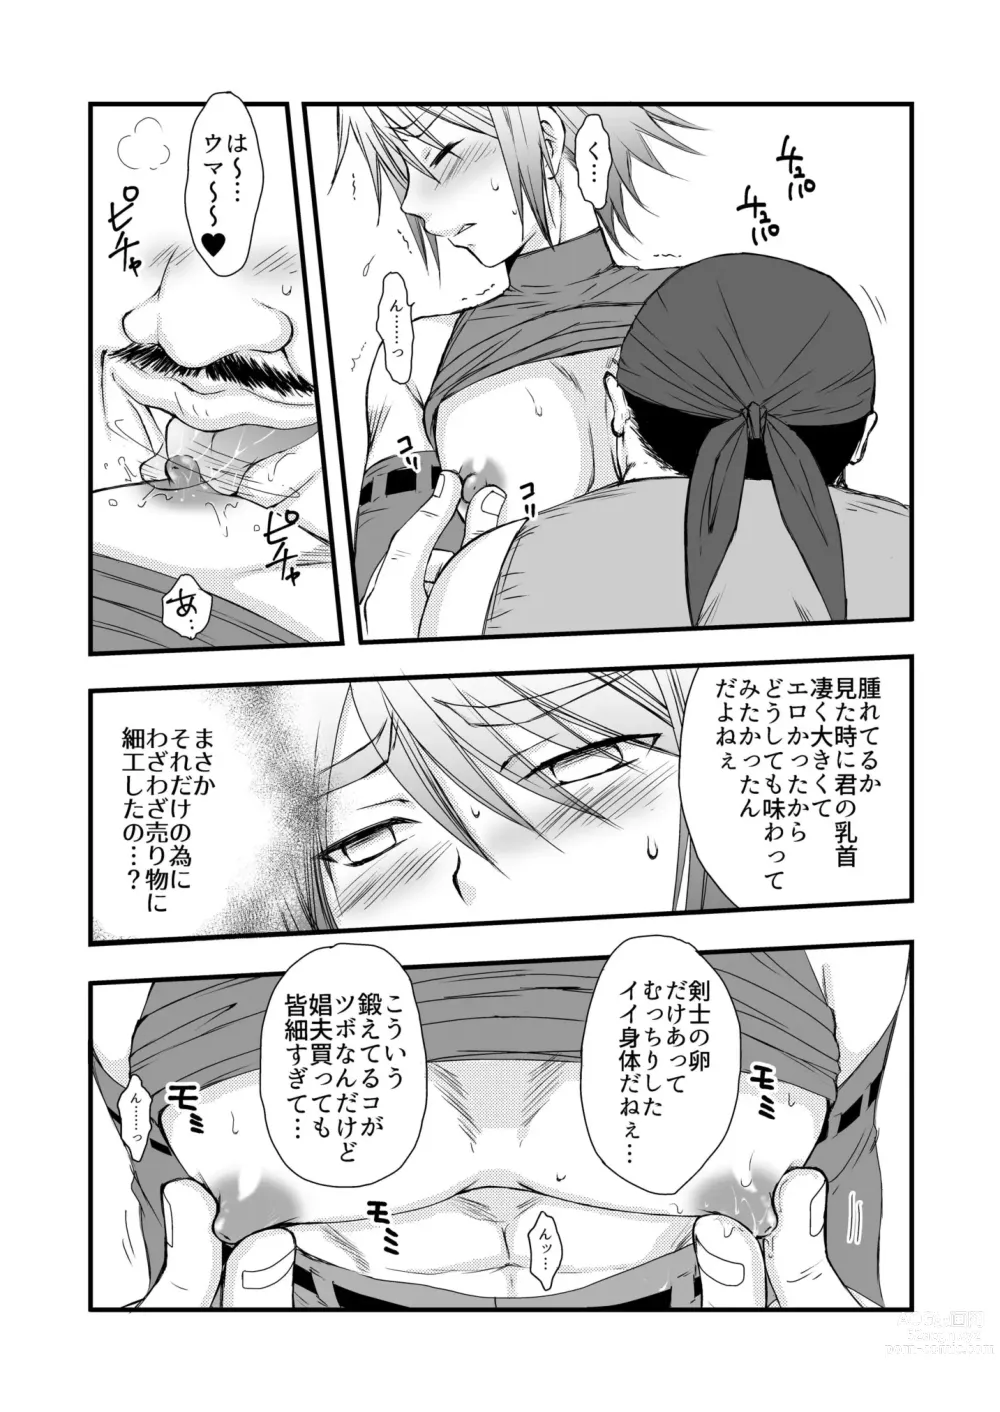 Page 15 of doujinshi Benshoushiro ga Tarinakute